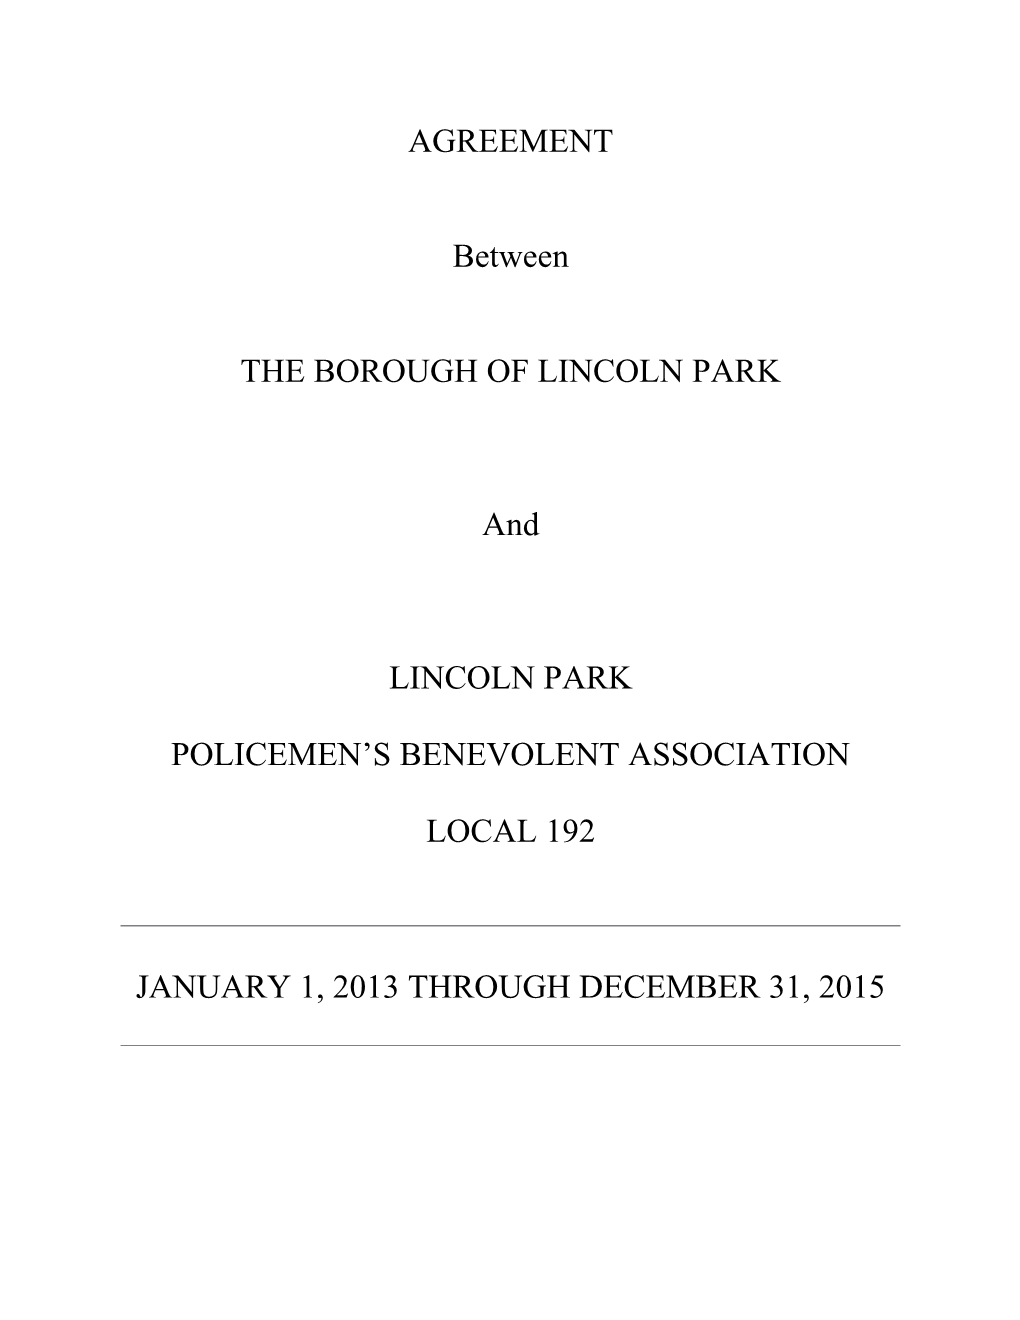 The Borough of Lincoln Park